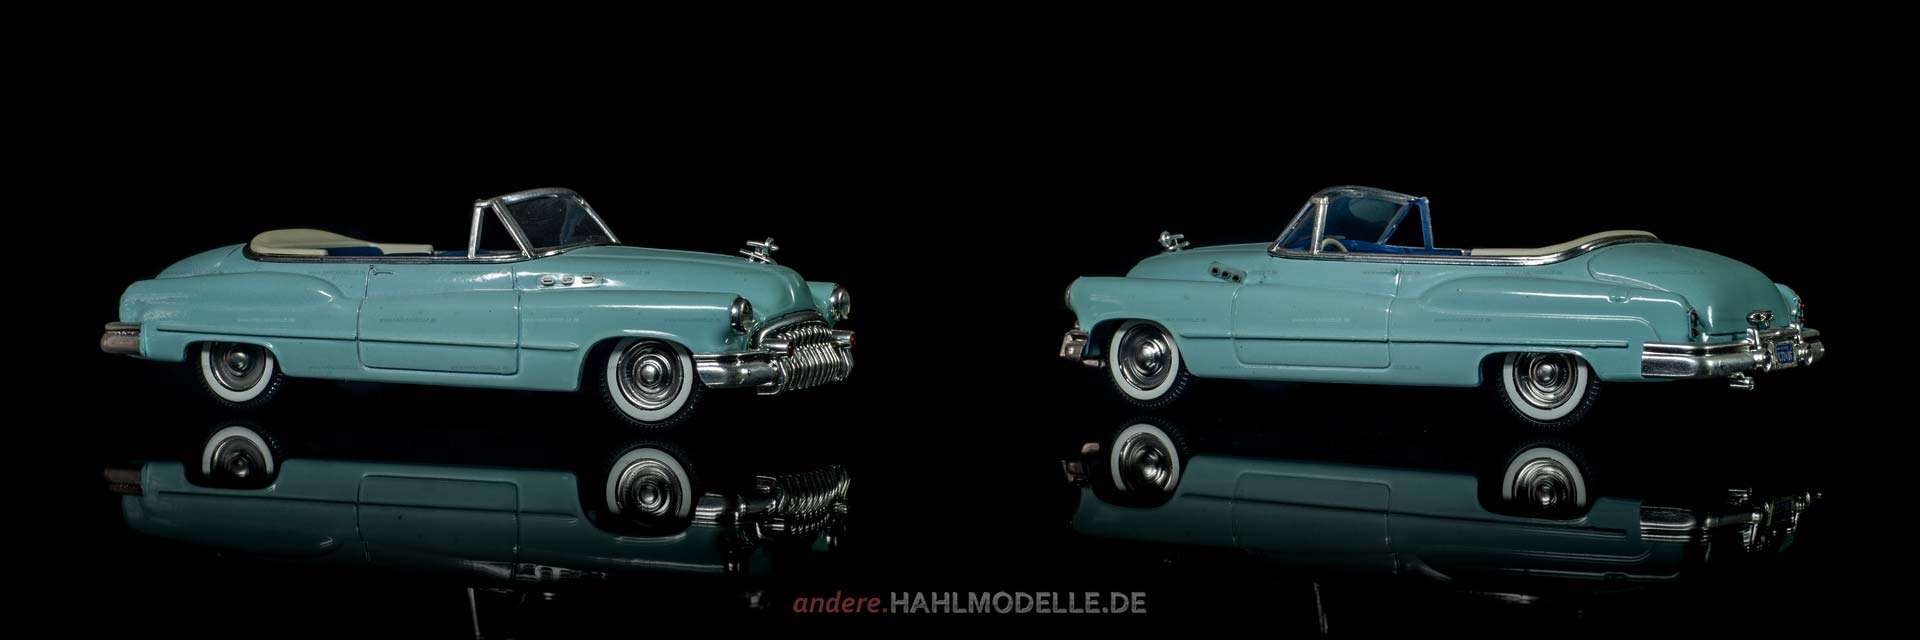 Buick Serie 50 Super Riviera Convertible Coupé | Cabriolet | Solido | 1:43 | www.andere.hahlmodelle.de